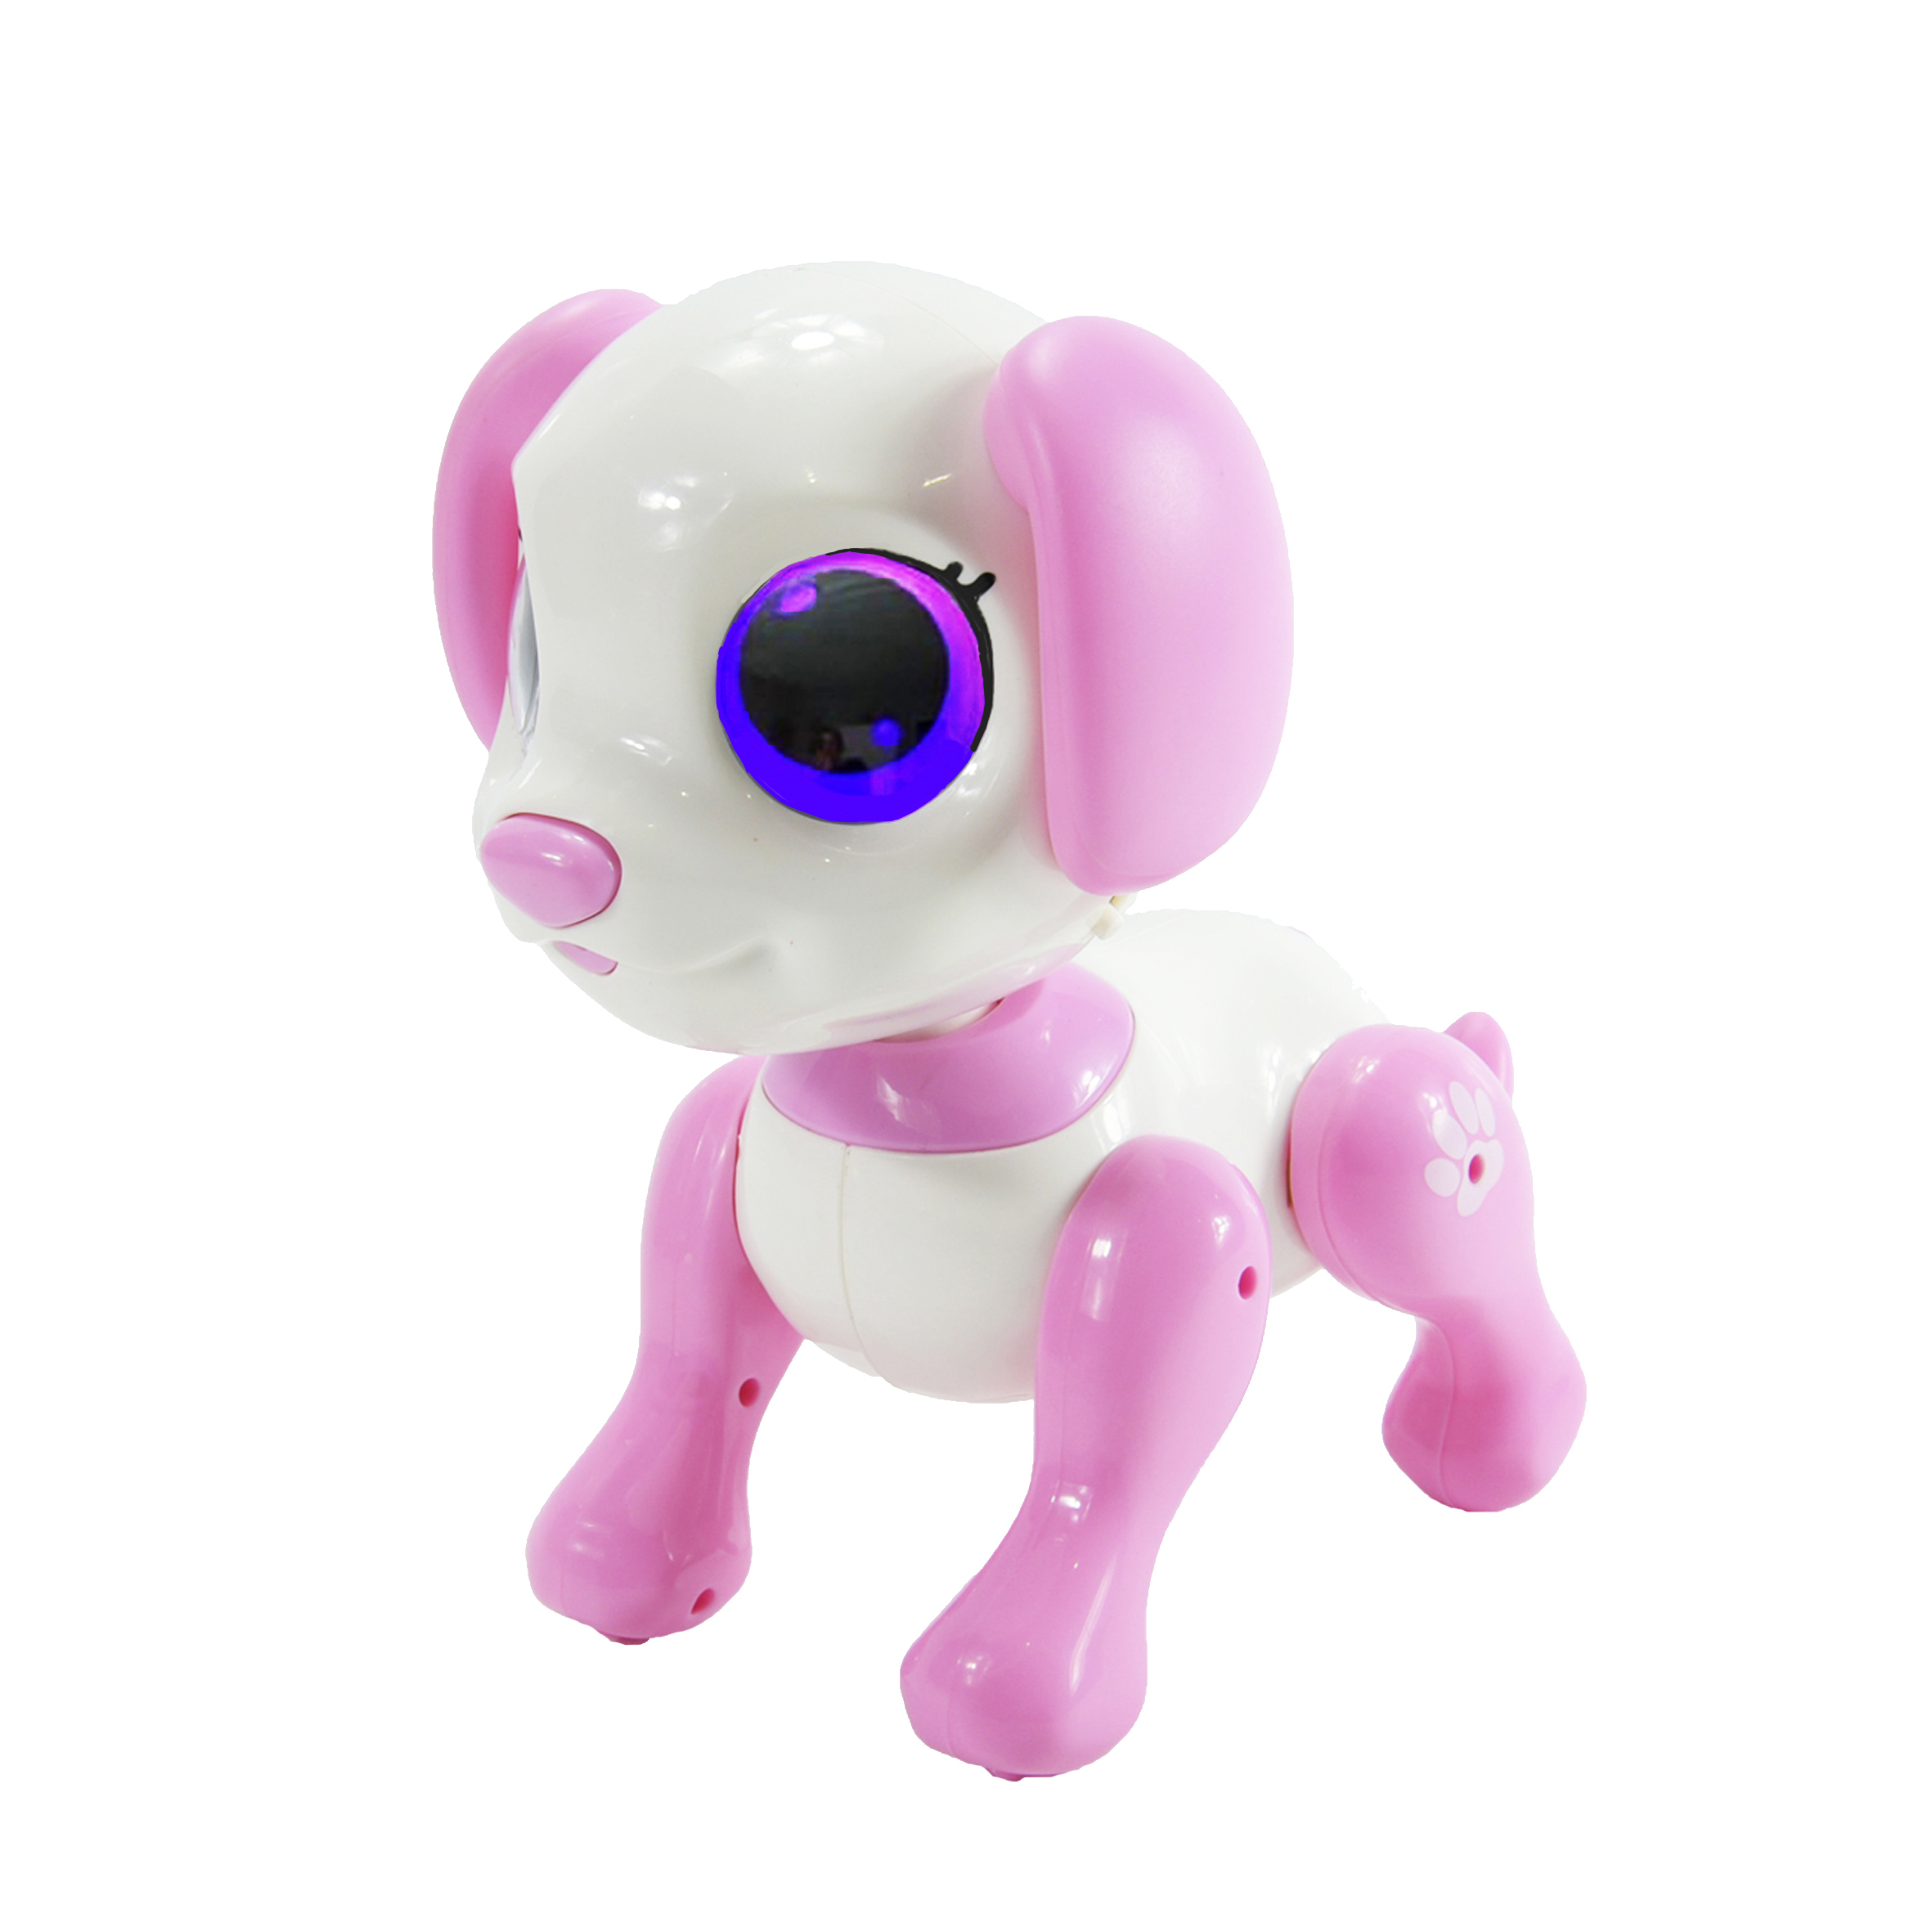 Gear2play Robo Smart Puppy Pinky